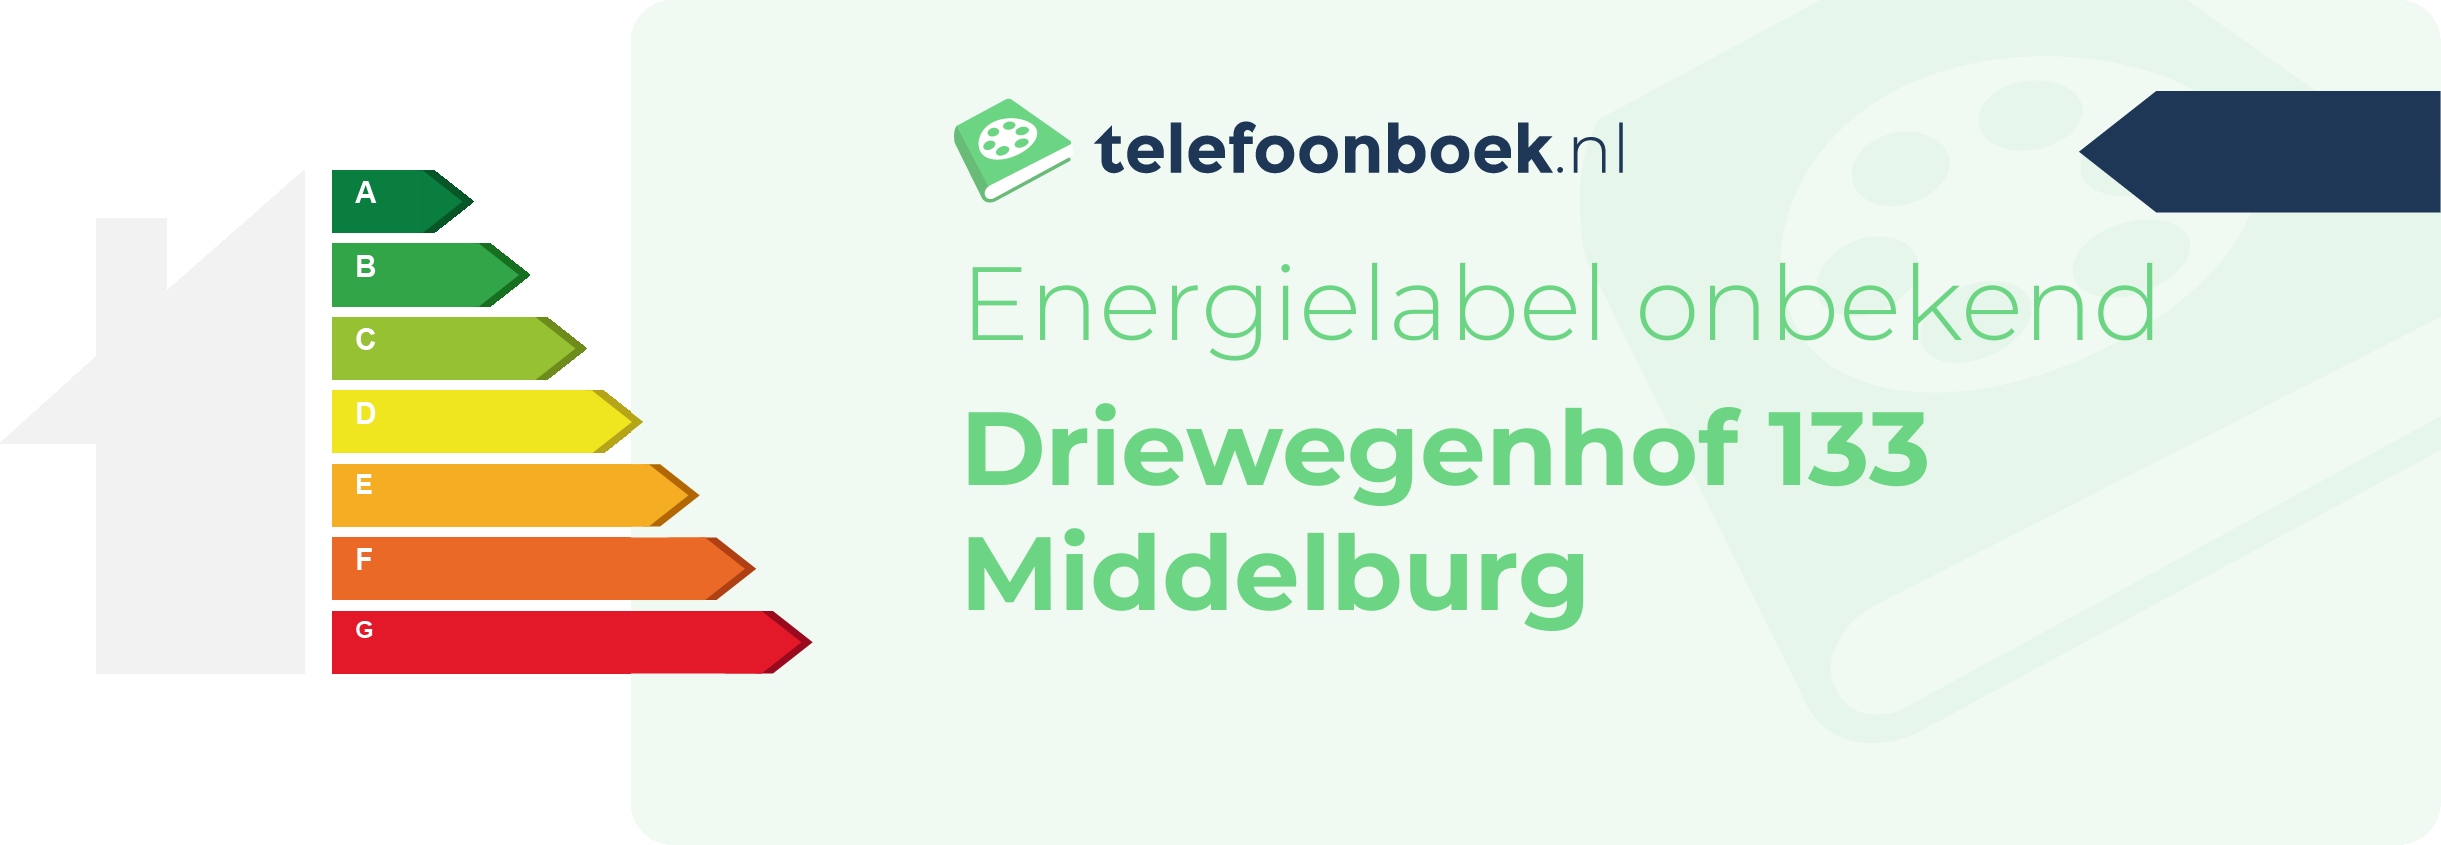 Energielabel Driewegenhof 133 Middelburg